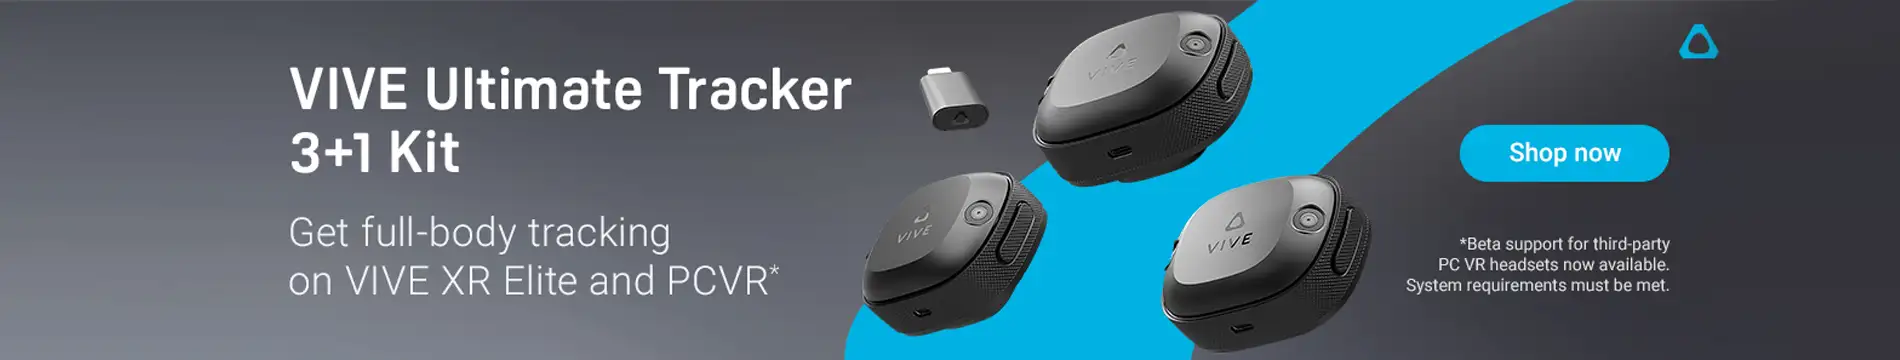 VIVE Ultimate Tracker 3 plus 1 Kit - Get full-body tracking on VIVE XR Elite and PCVR. Shop Now